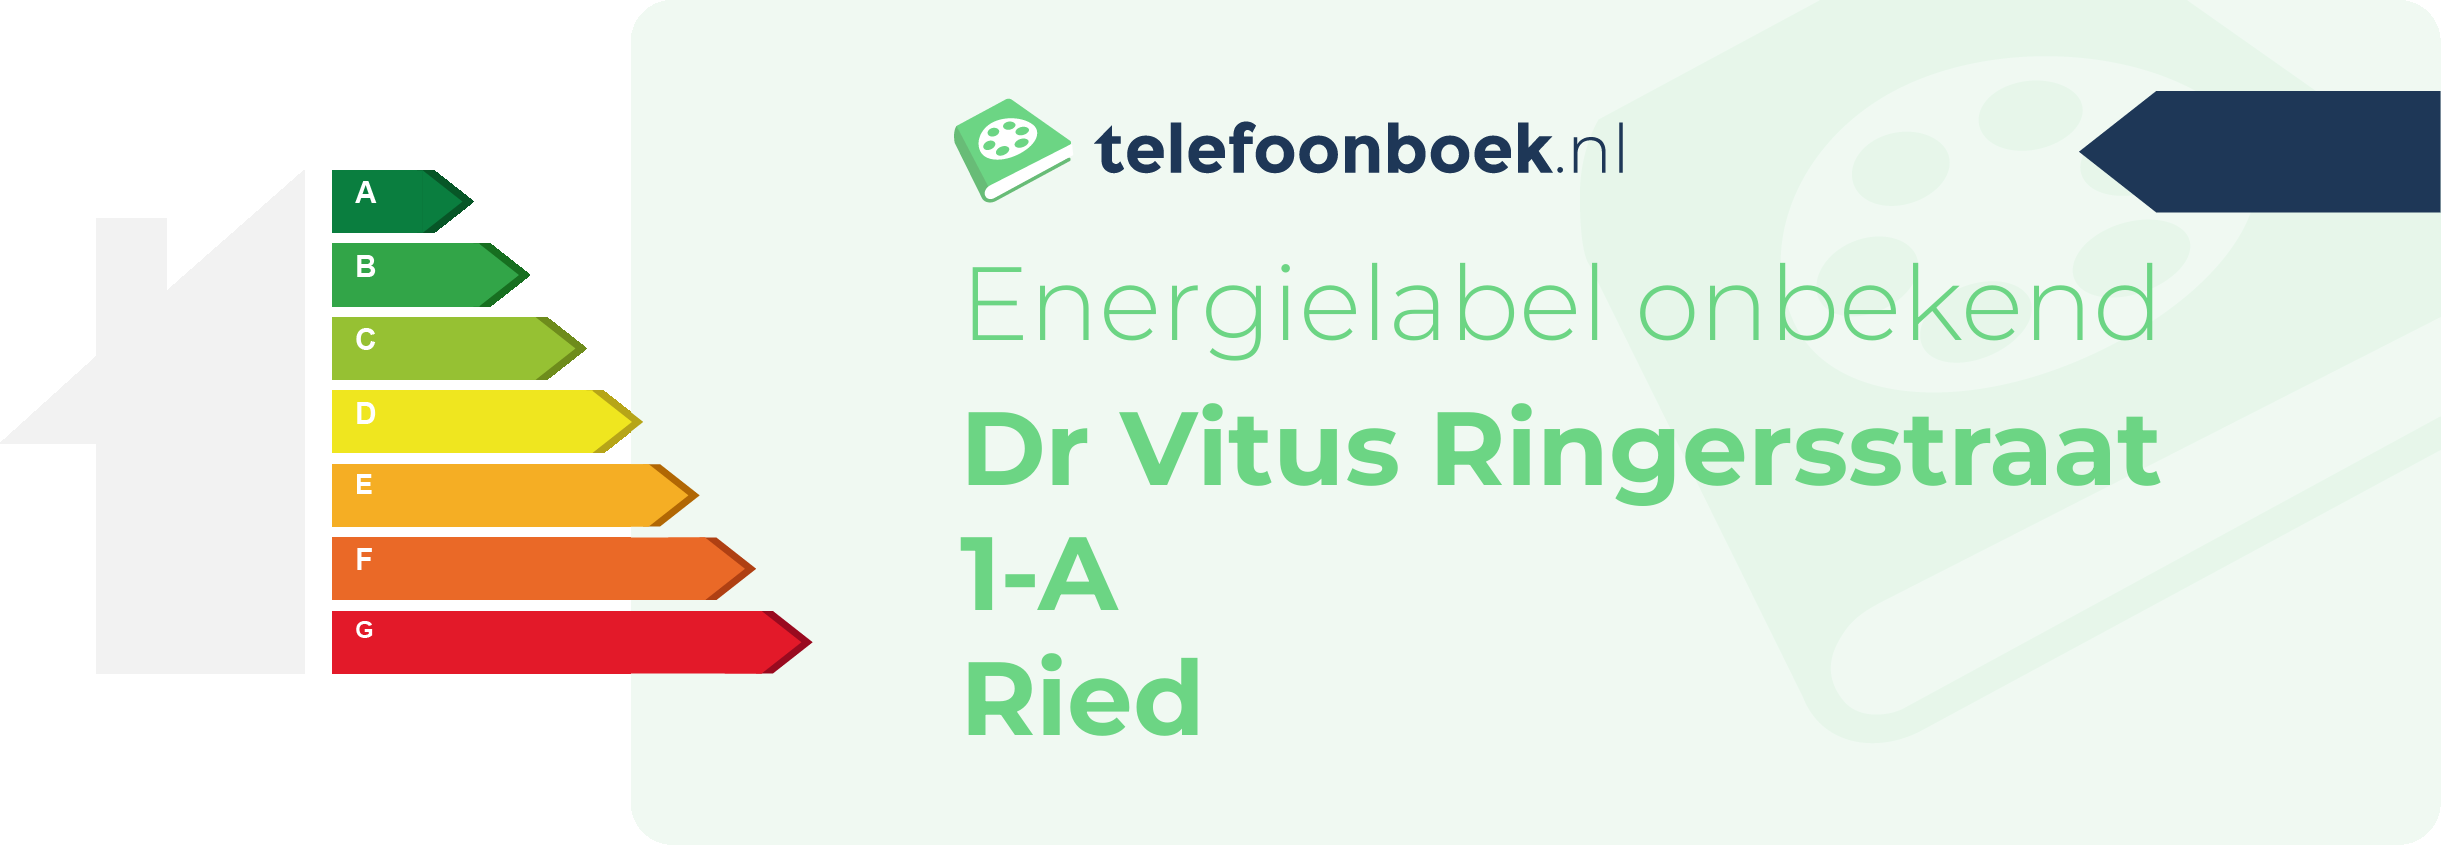 Energielabel Dr Vitus Ringersstraat 1-A Ried